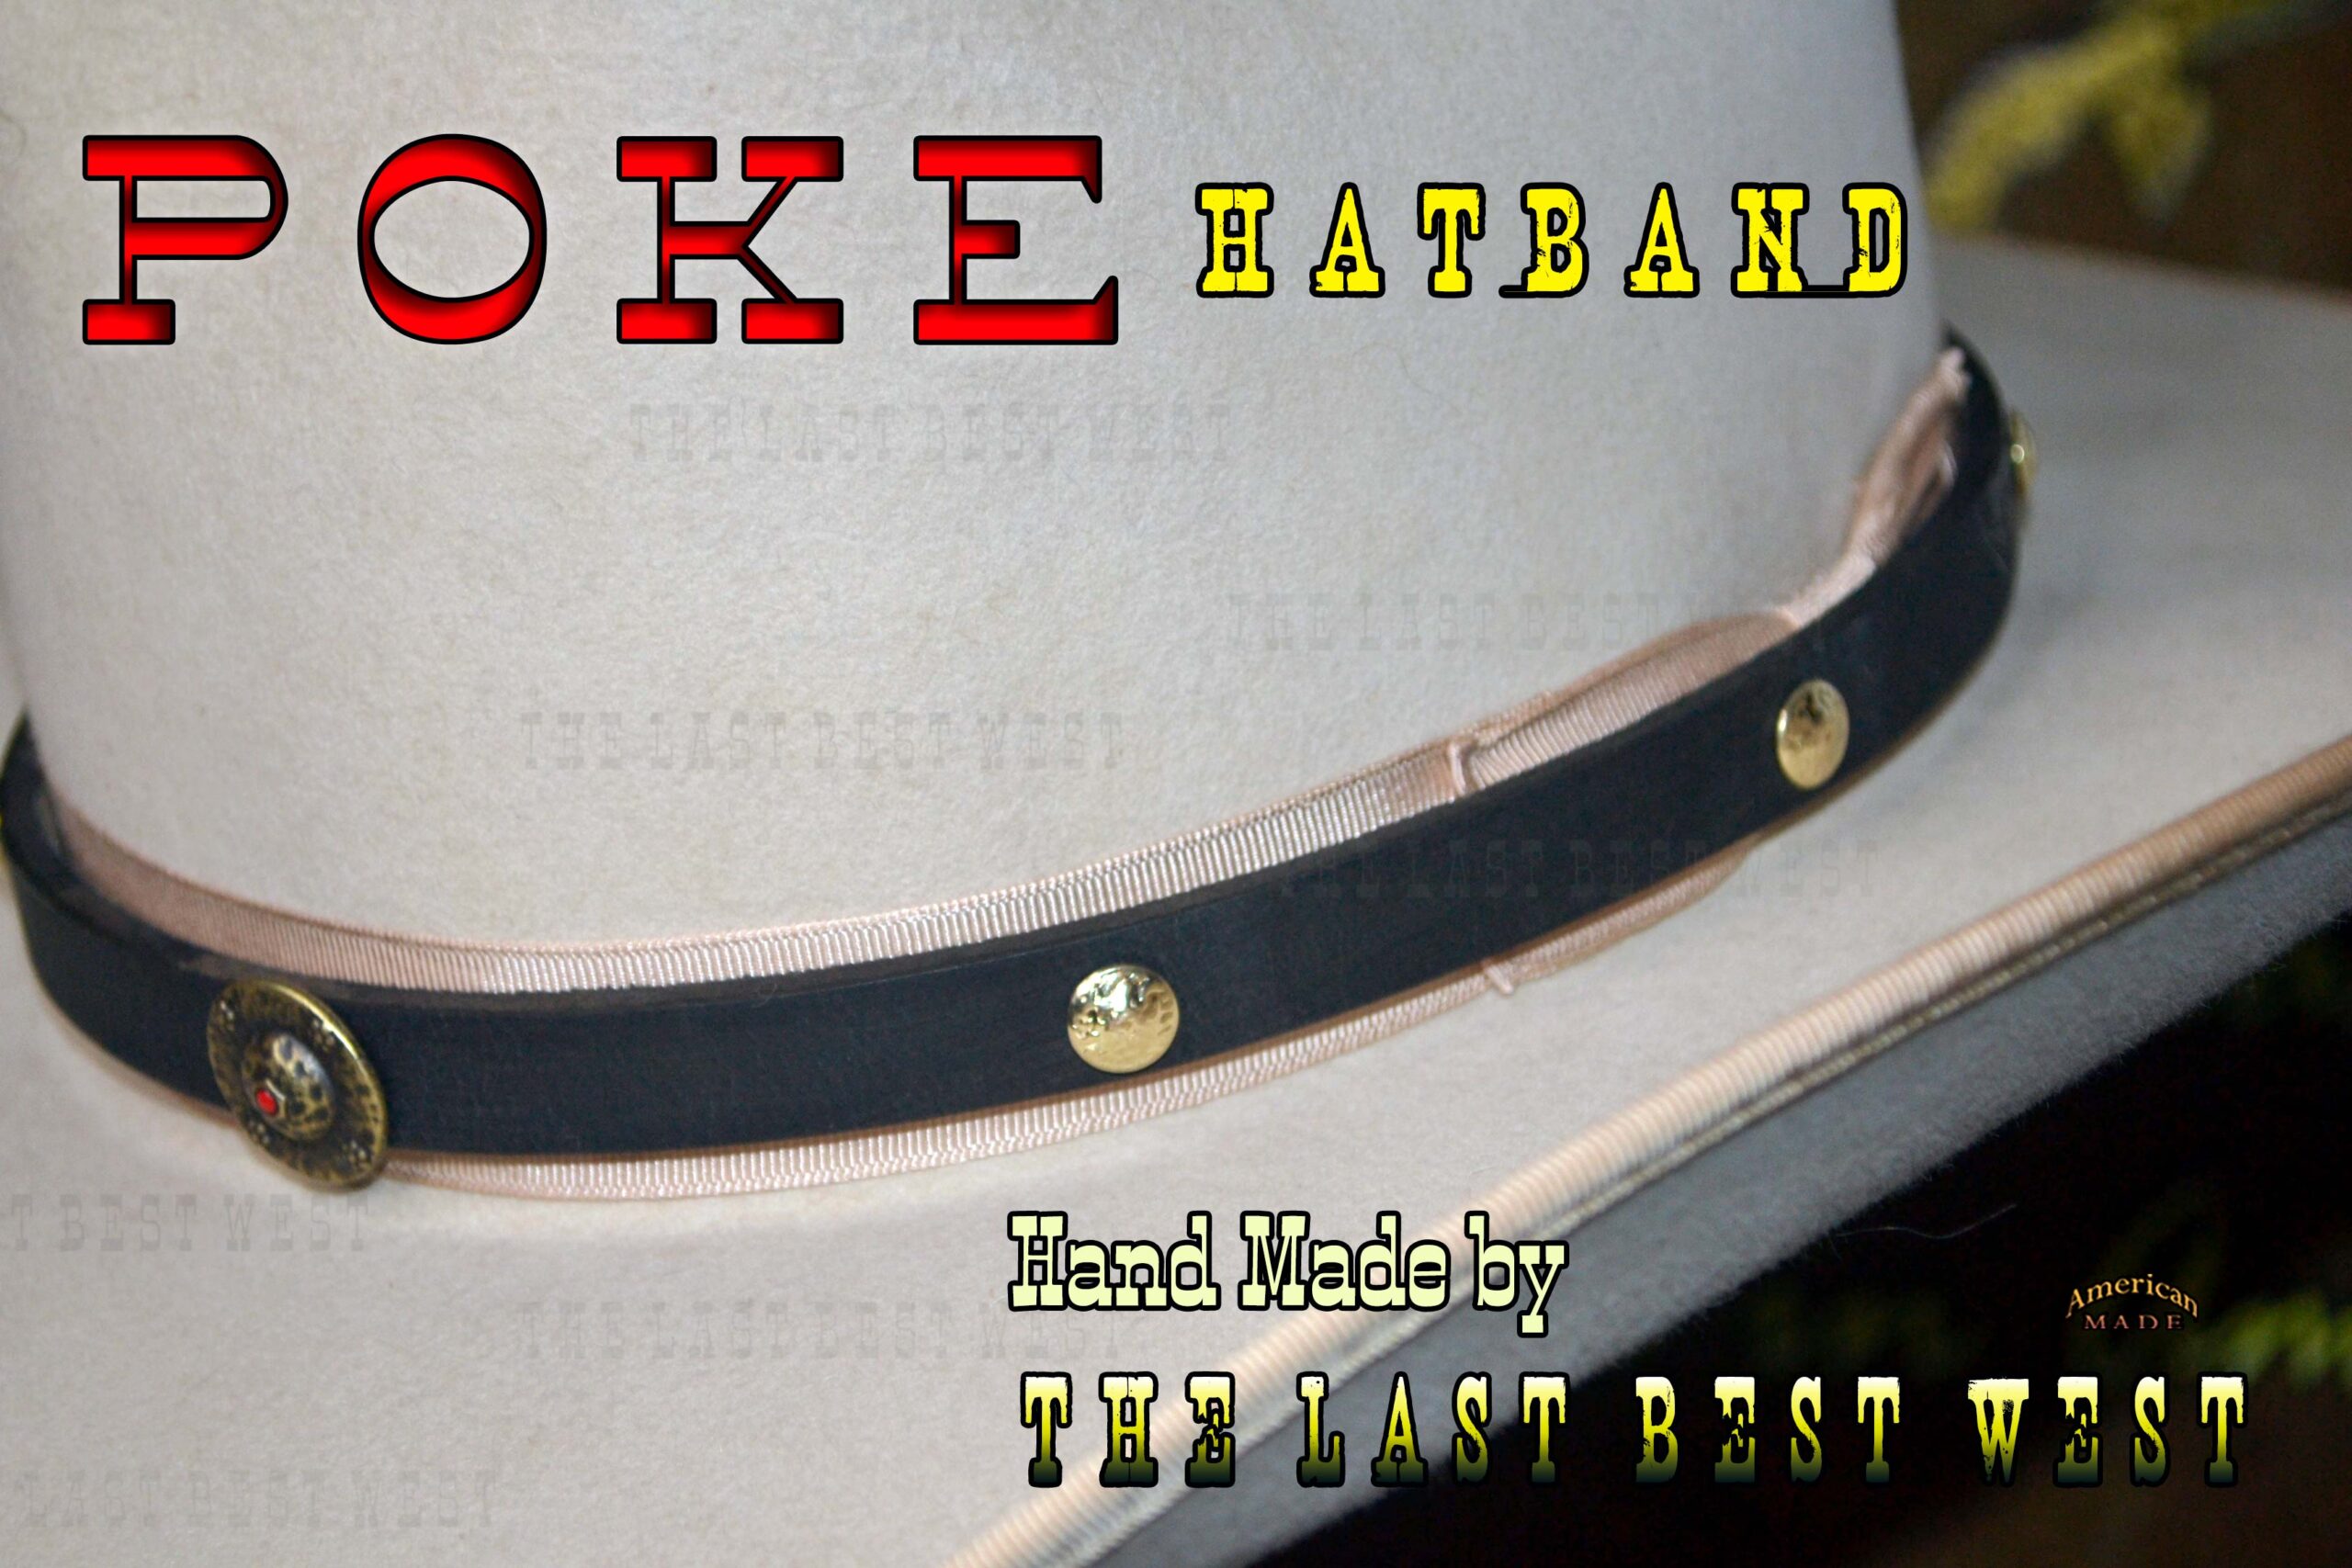 Poke custom hatband